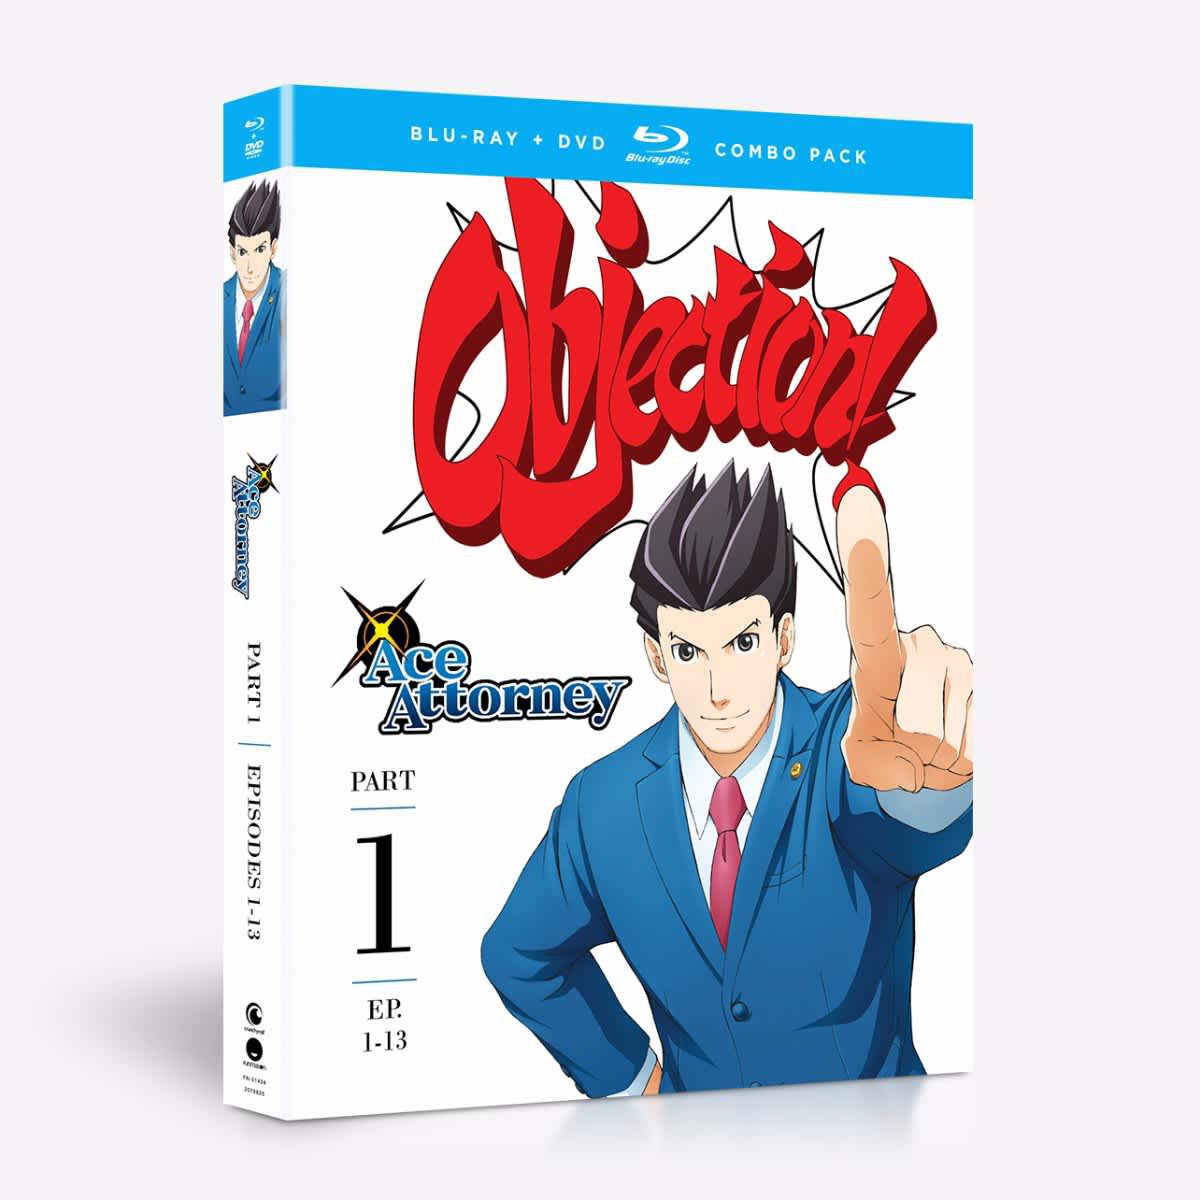 Ace Attorney - Part 1 - Blu-ray + DVD | Crunchyroll Store